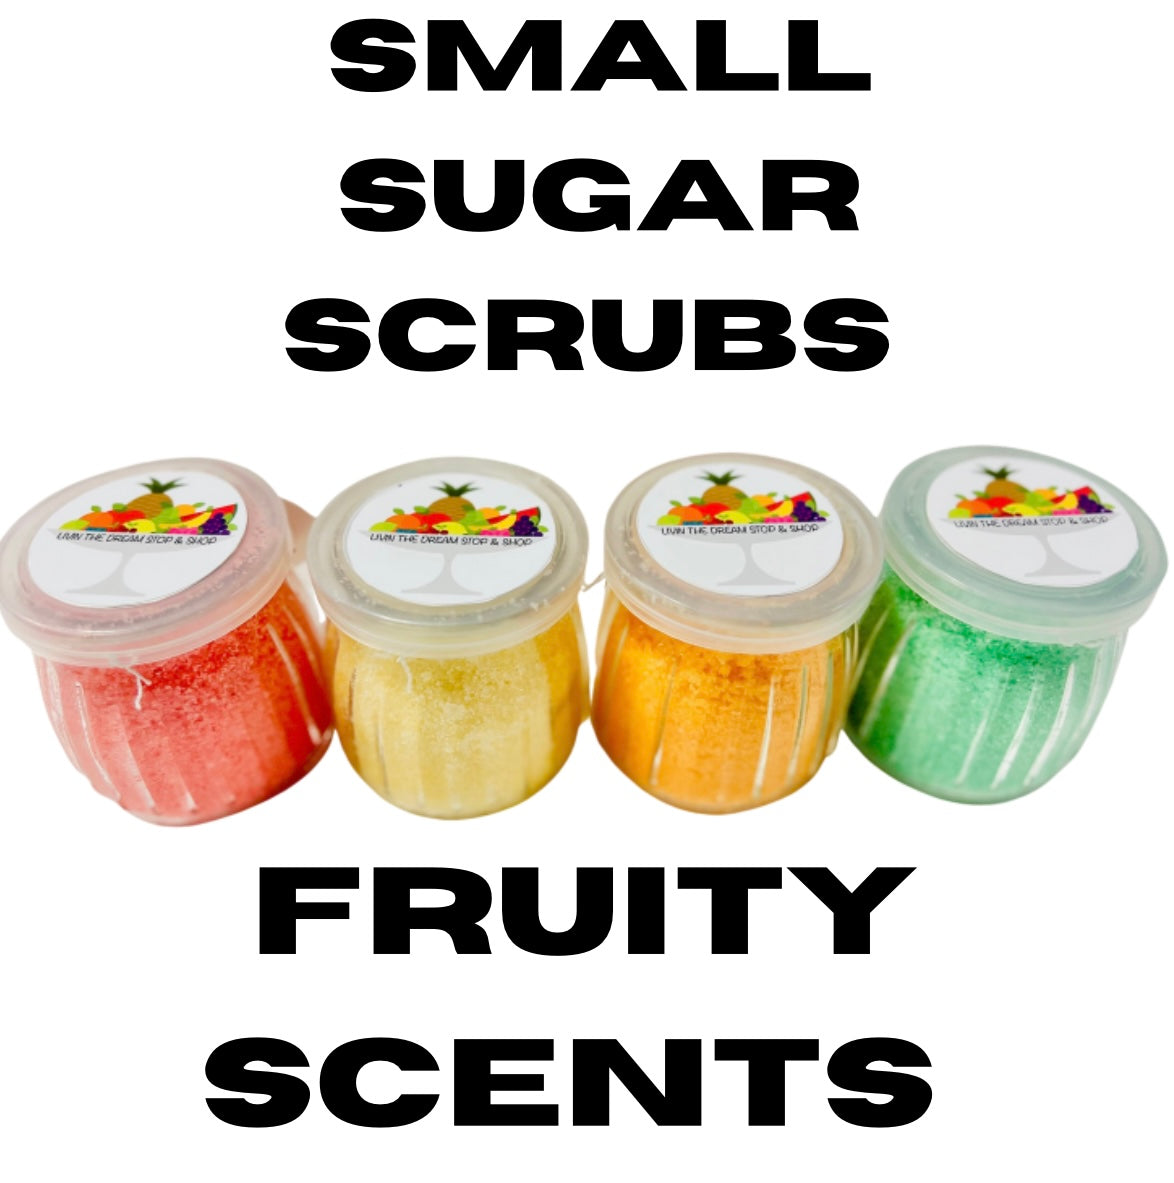 Small-sugar scrubs made by miss Marie!